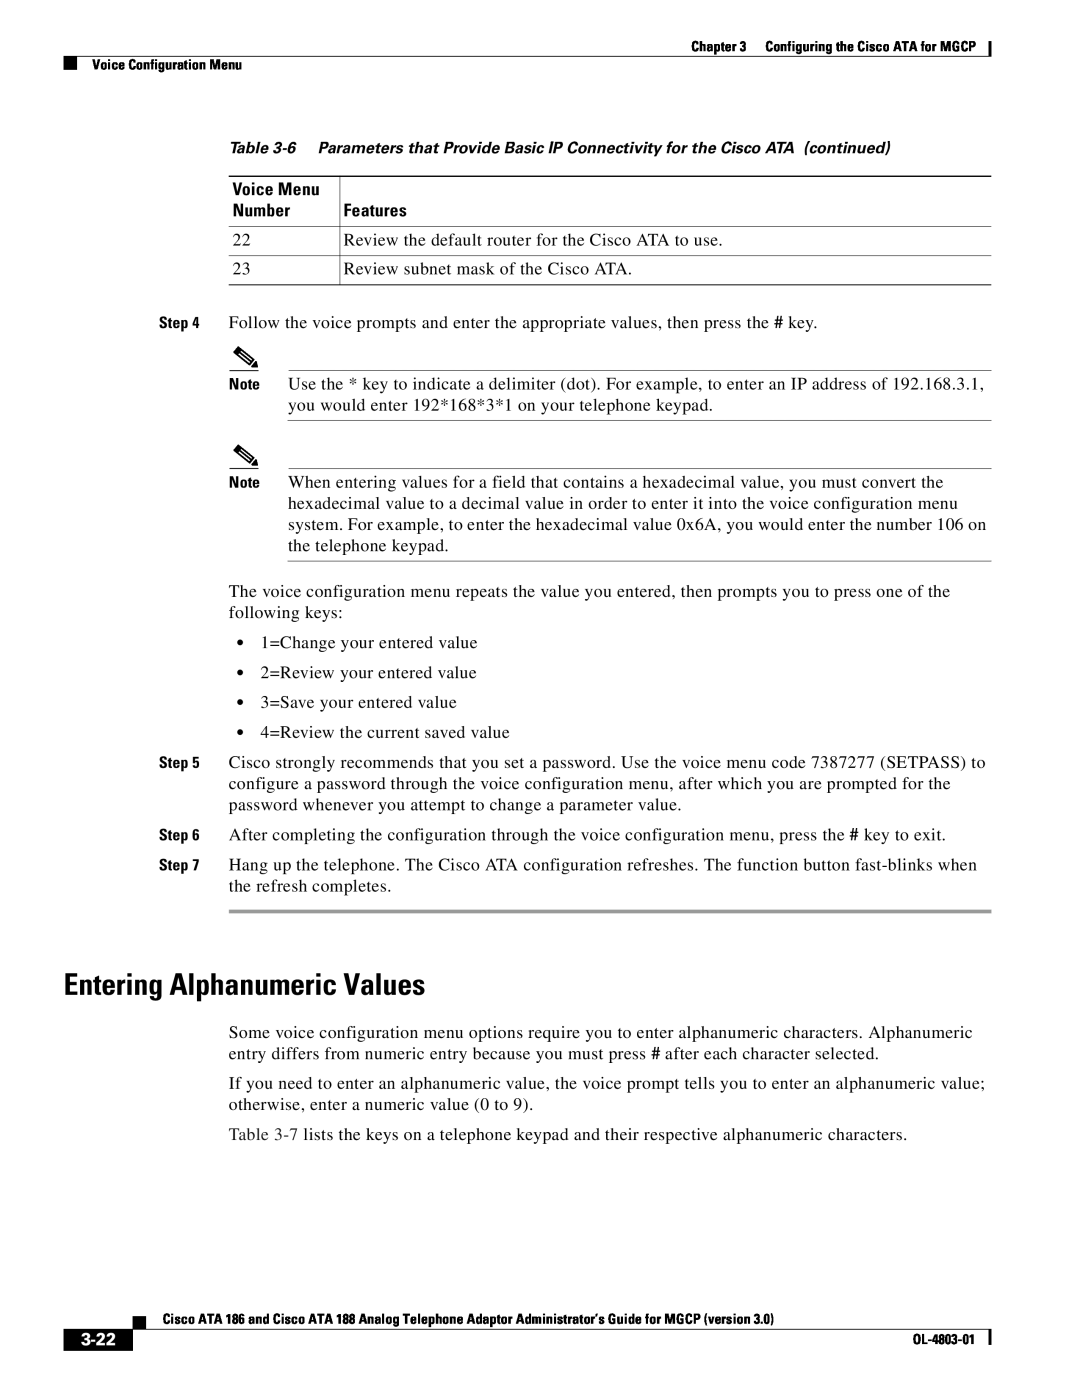 Cisco Systems ATA 186, ATA 188 manual Entering Alphanumeric Values, 3-22, Voice Menu, Number 